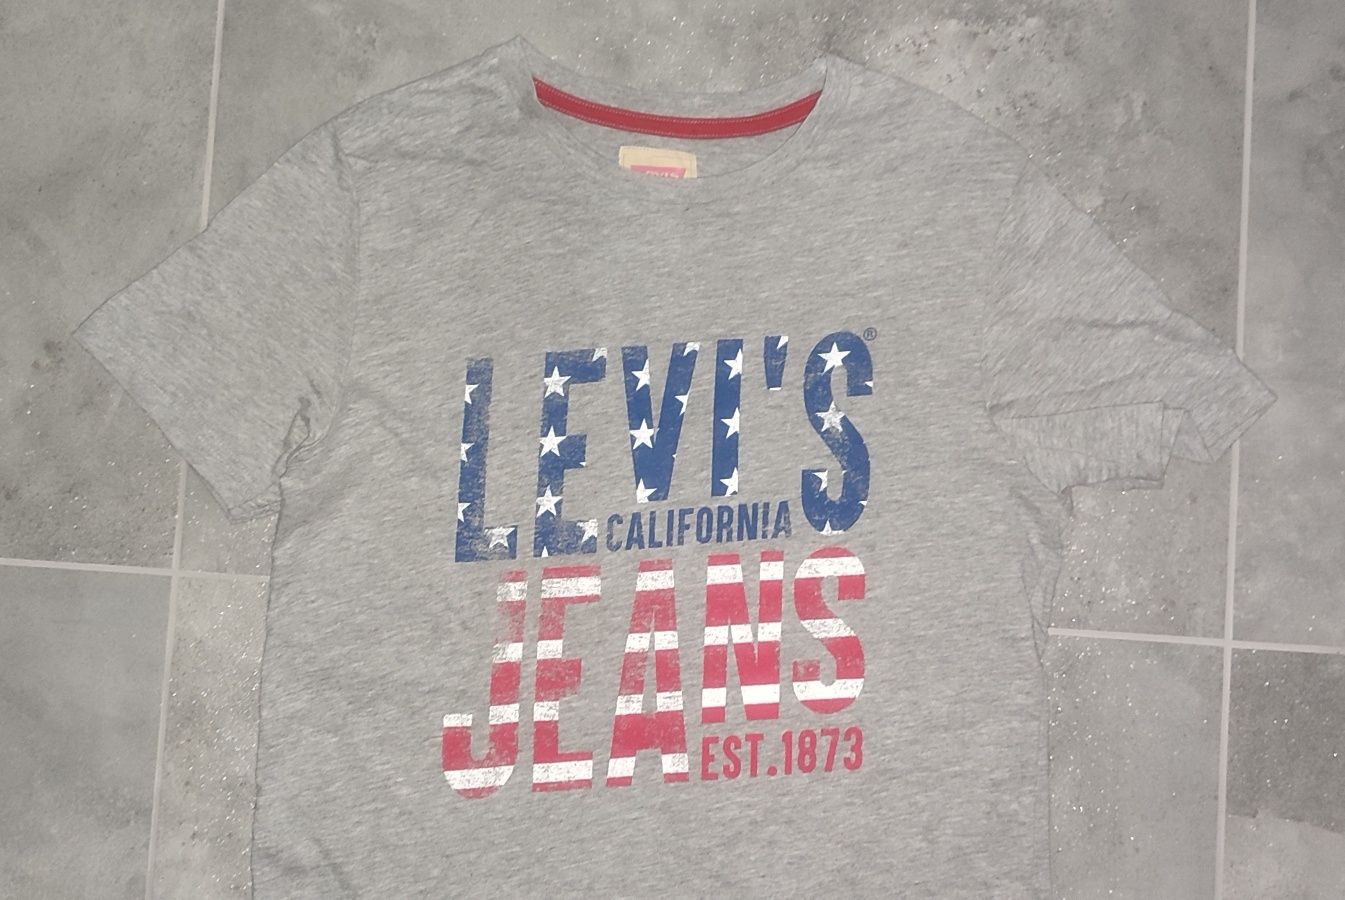 Koszulka Levi's r. 16 / L t-shirt Levi's